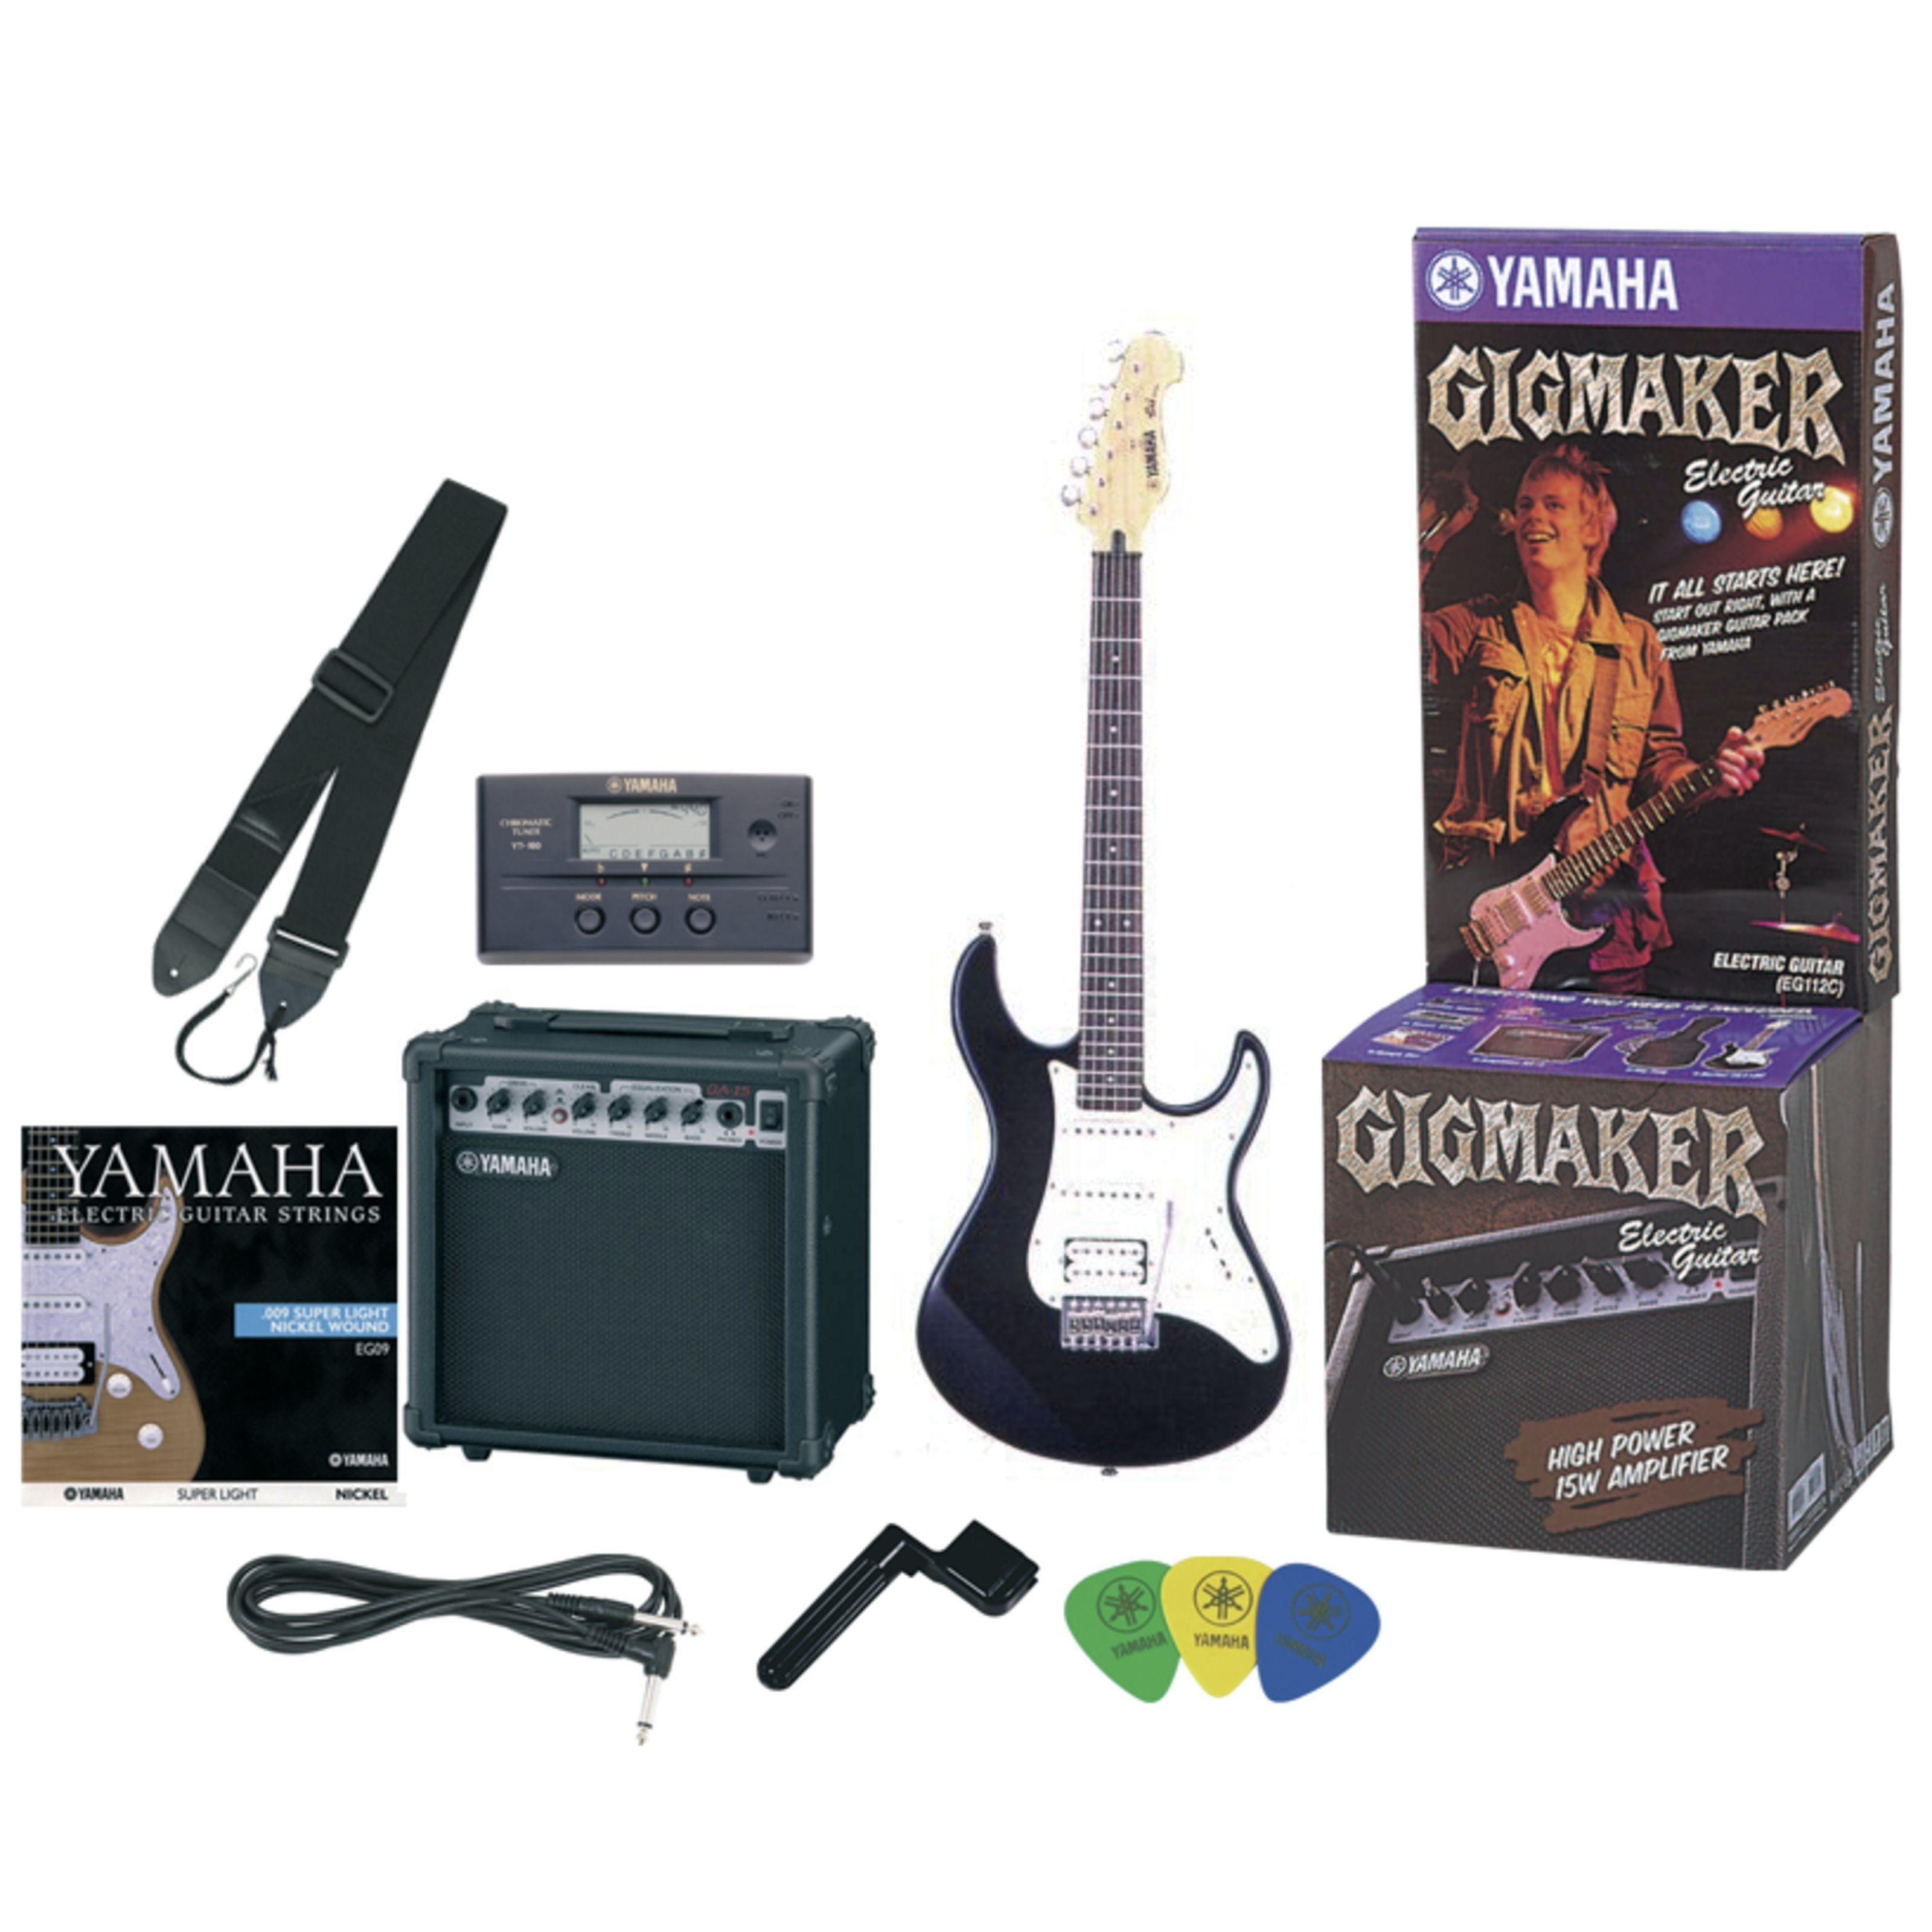 Yamaha E-Gitarre, EG-112GP Gigmaker Paket mit Amp, Tuner u.a. Zubehör - E-Gitarren Anf